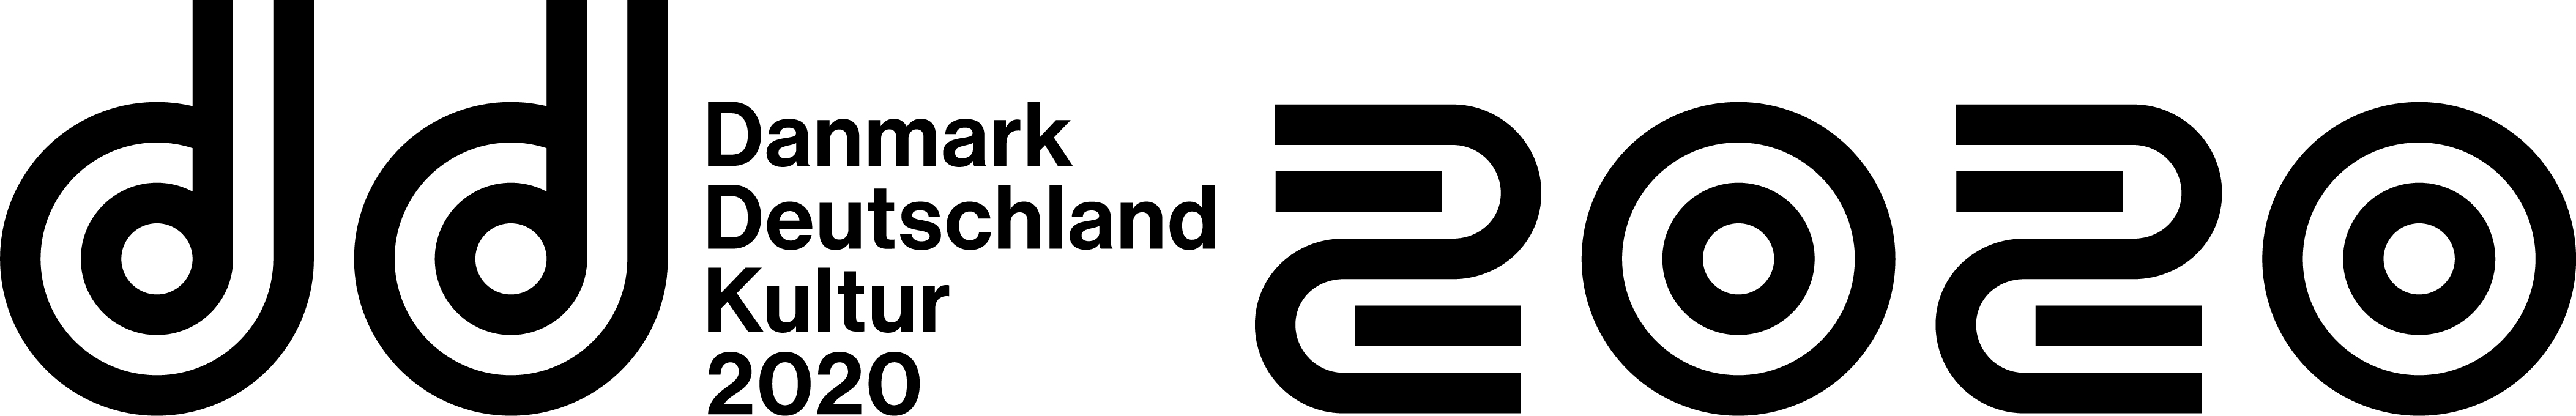 DD2020 Logo Naming Horizontal Black RGB